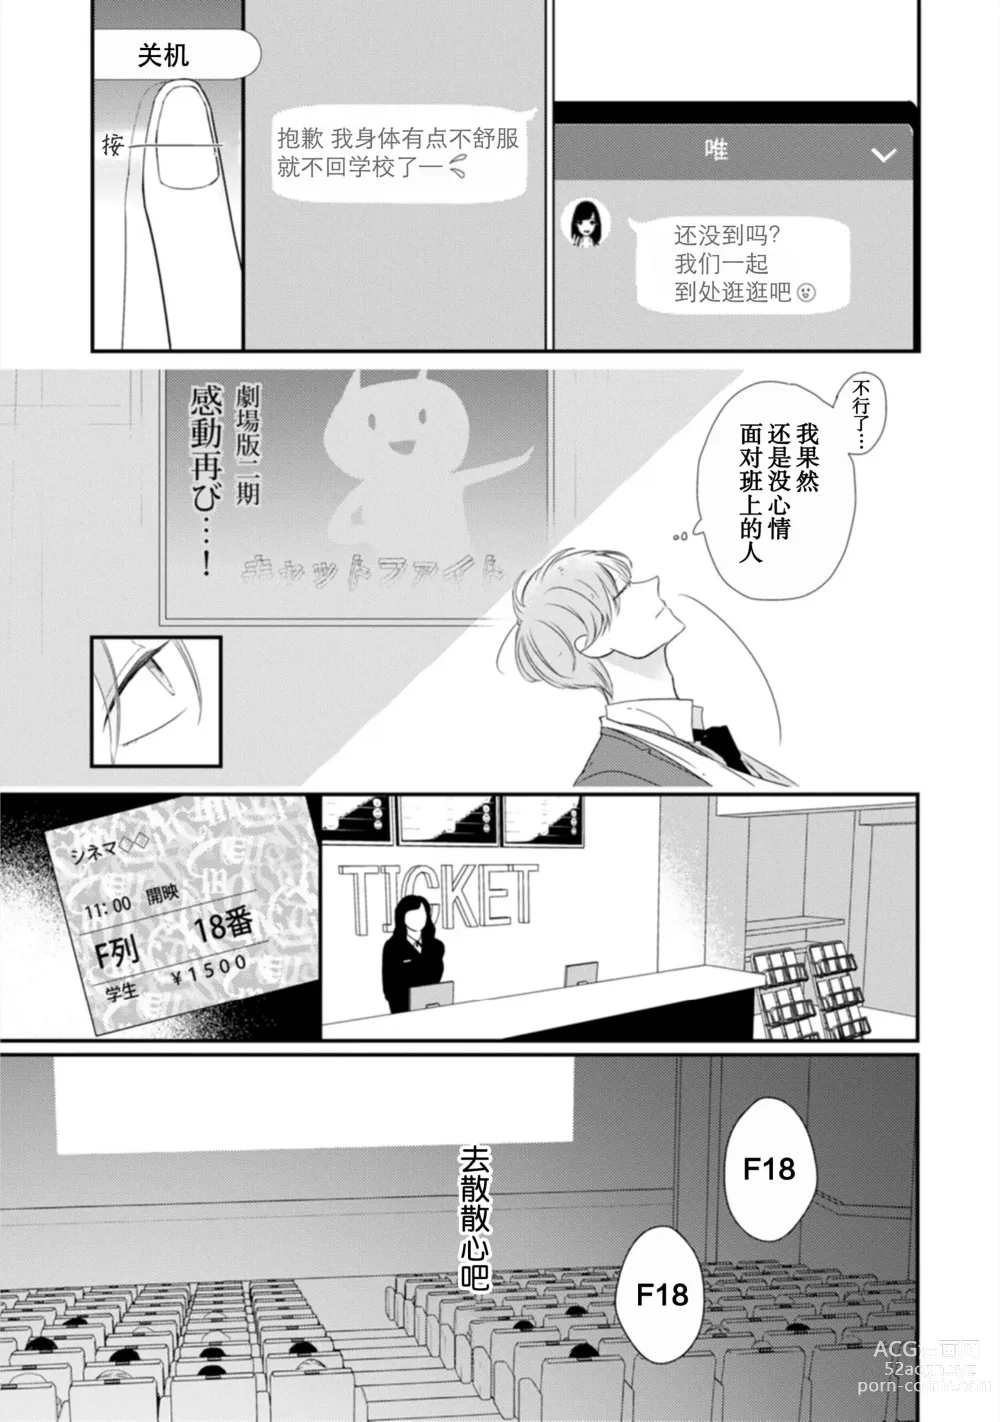 Page 19 of manga 渴望褪下制服